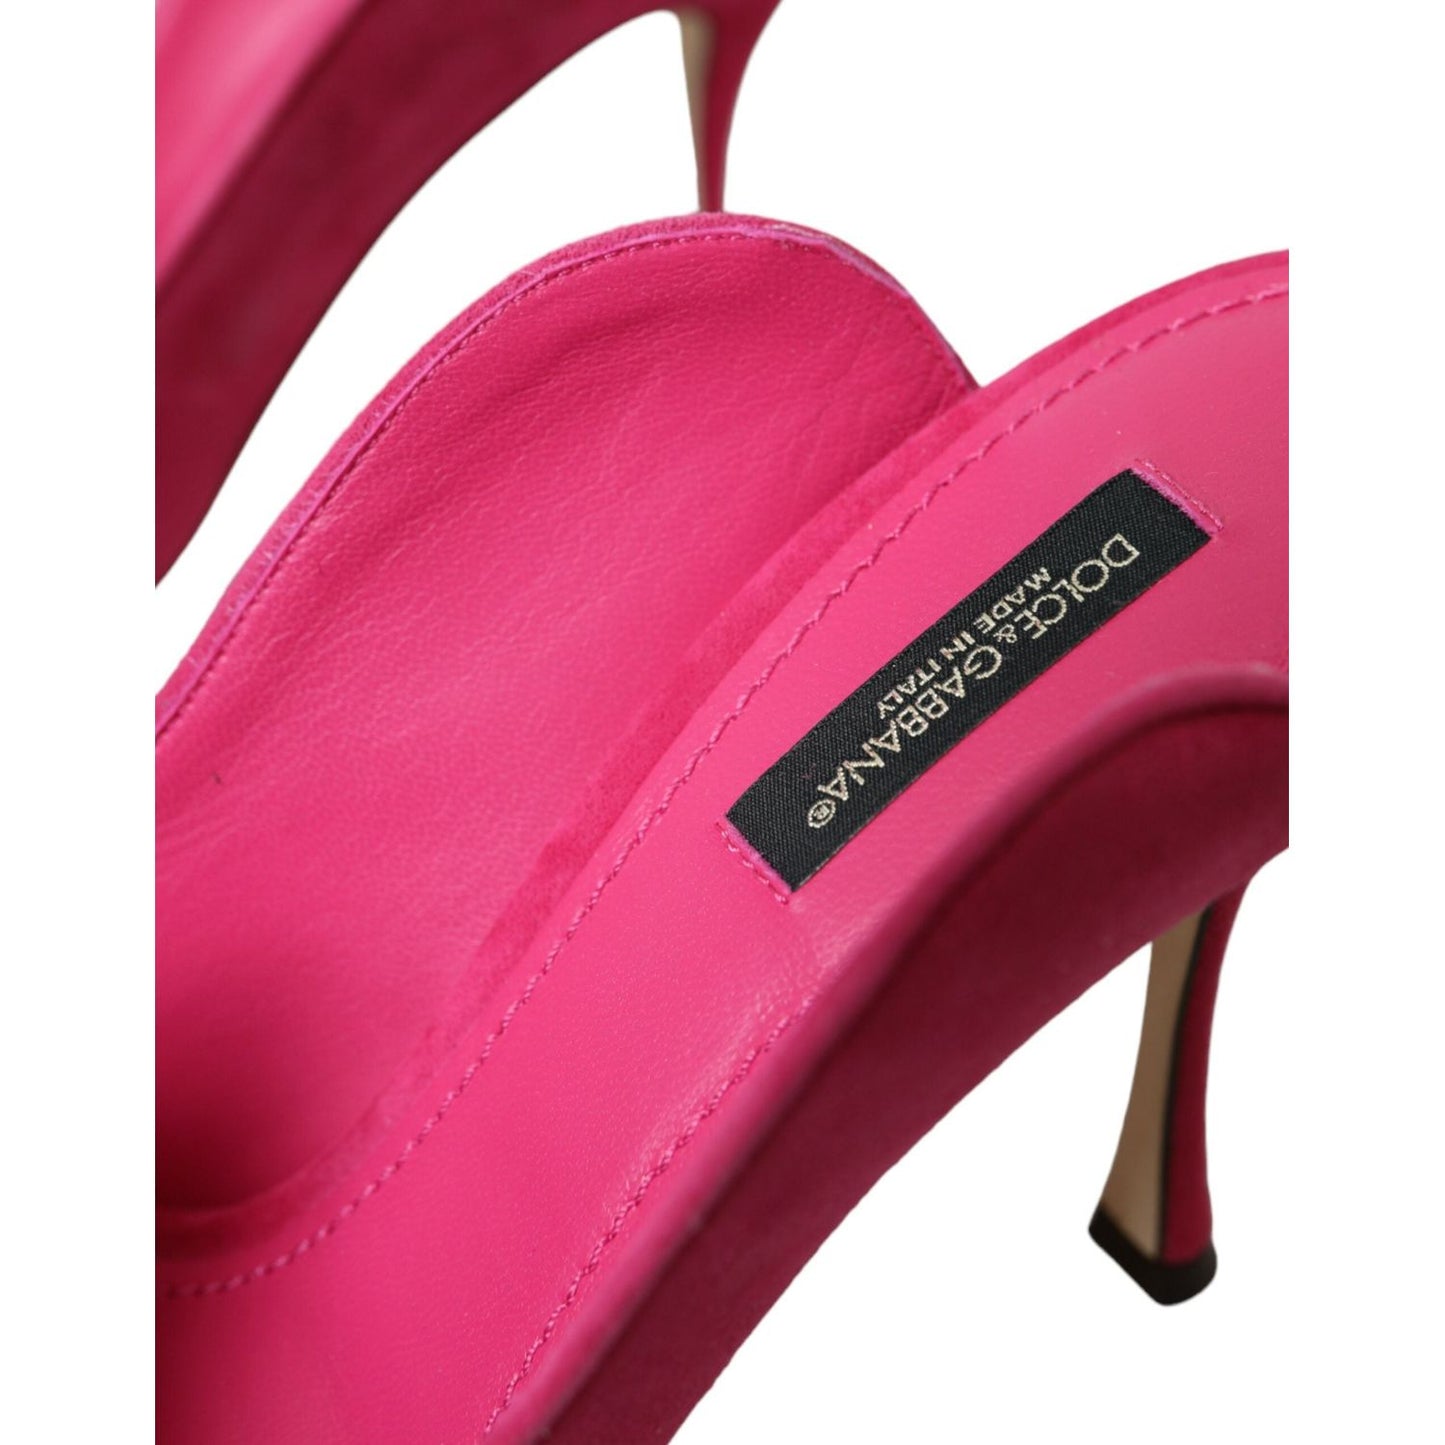 Dolce & Gabbana Fuchsia Suede Leather Mules Sandals Shoes fuchsia-suede-leather-mules-sandals-shoes